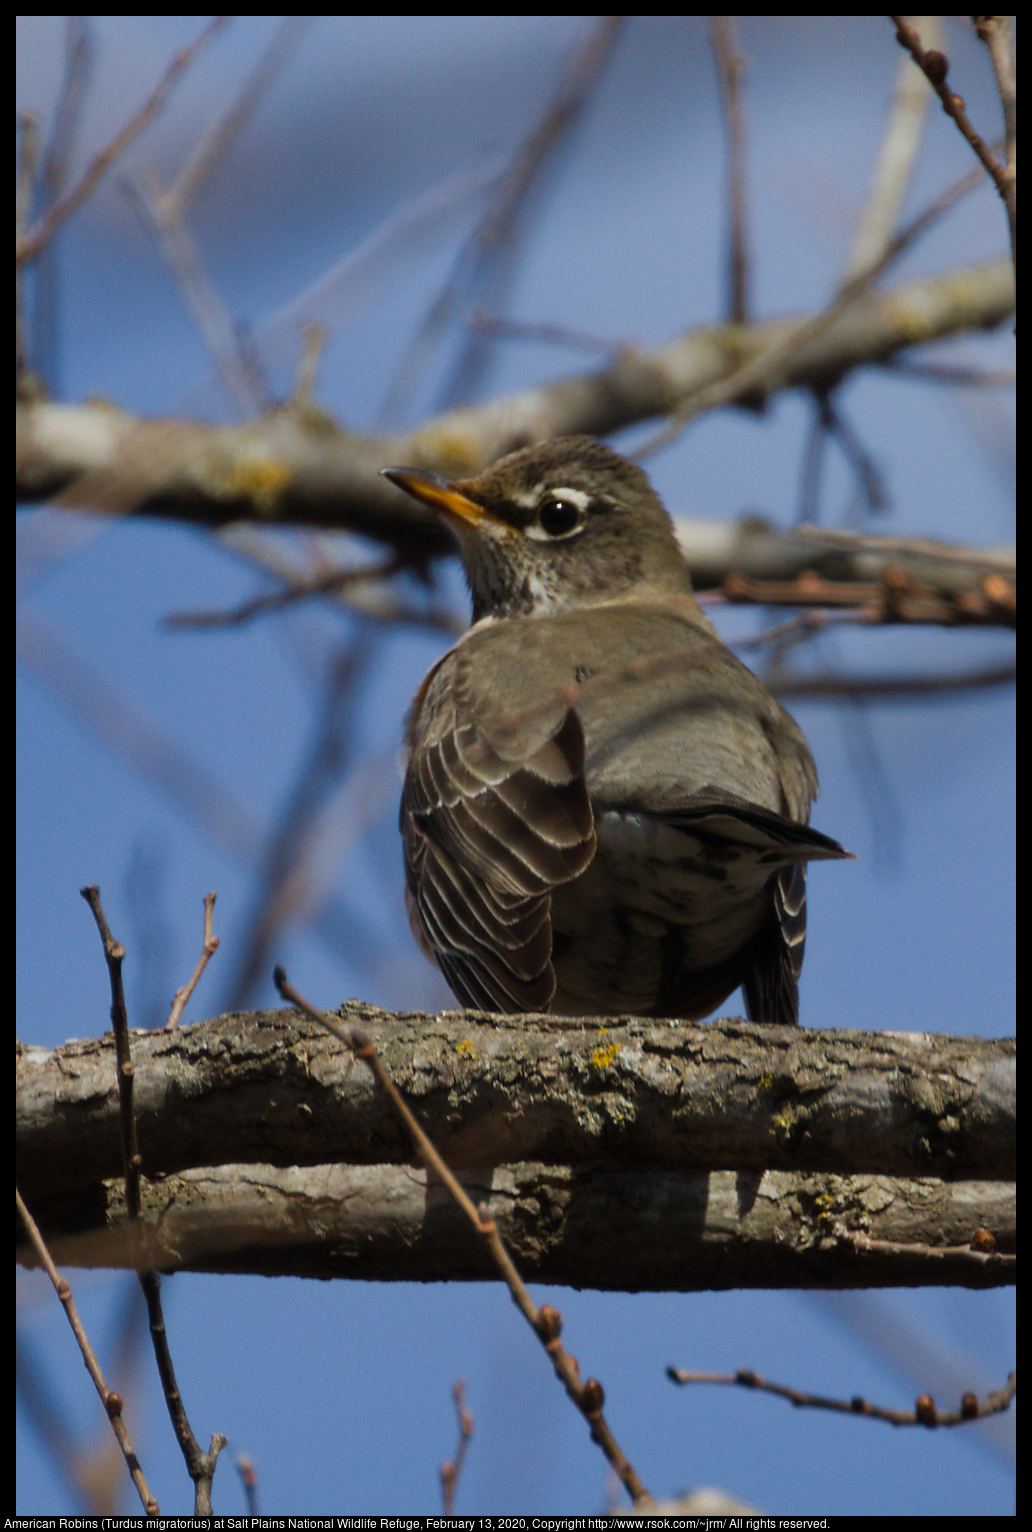 American Robins (Turdus migratorius) at Salt Plains National Wildlife Refuge, February 13, 2020